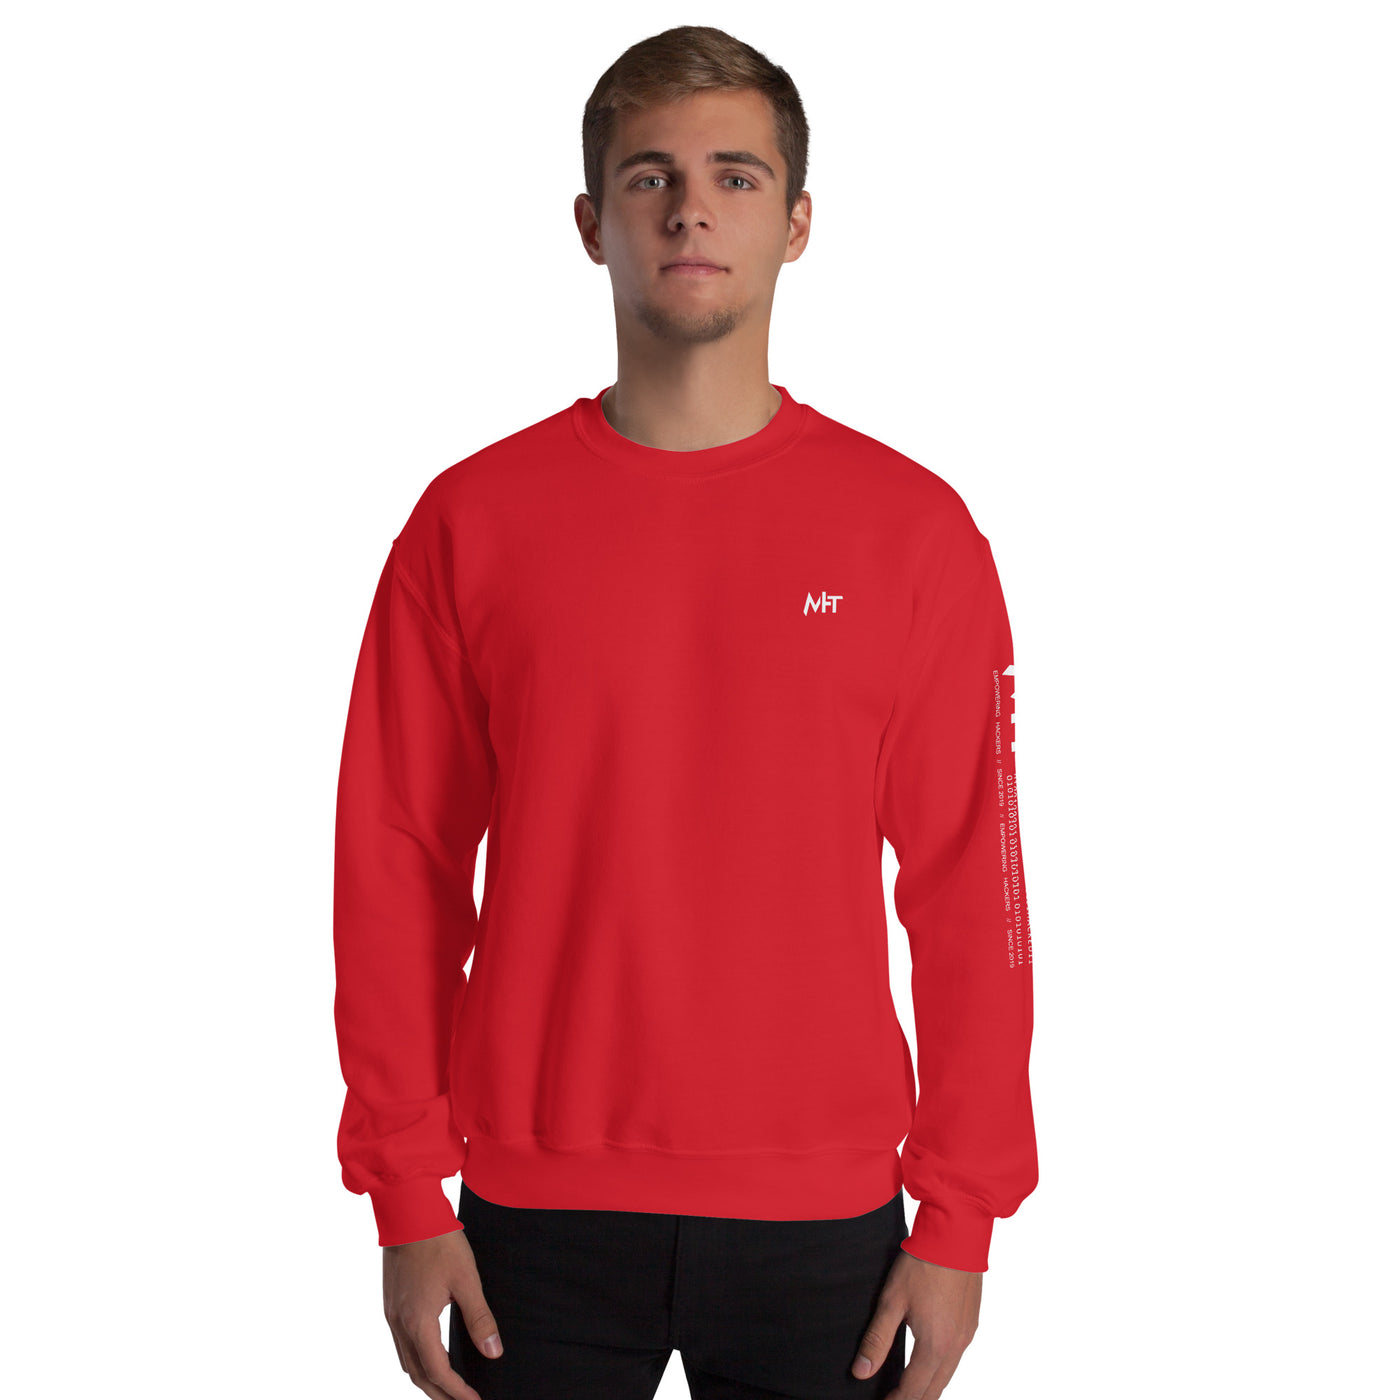 Cyber Security Red Team V8 - Unisex Sweatshirt ( Back Print )